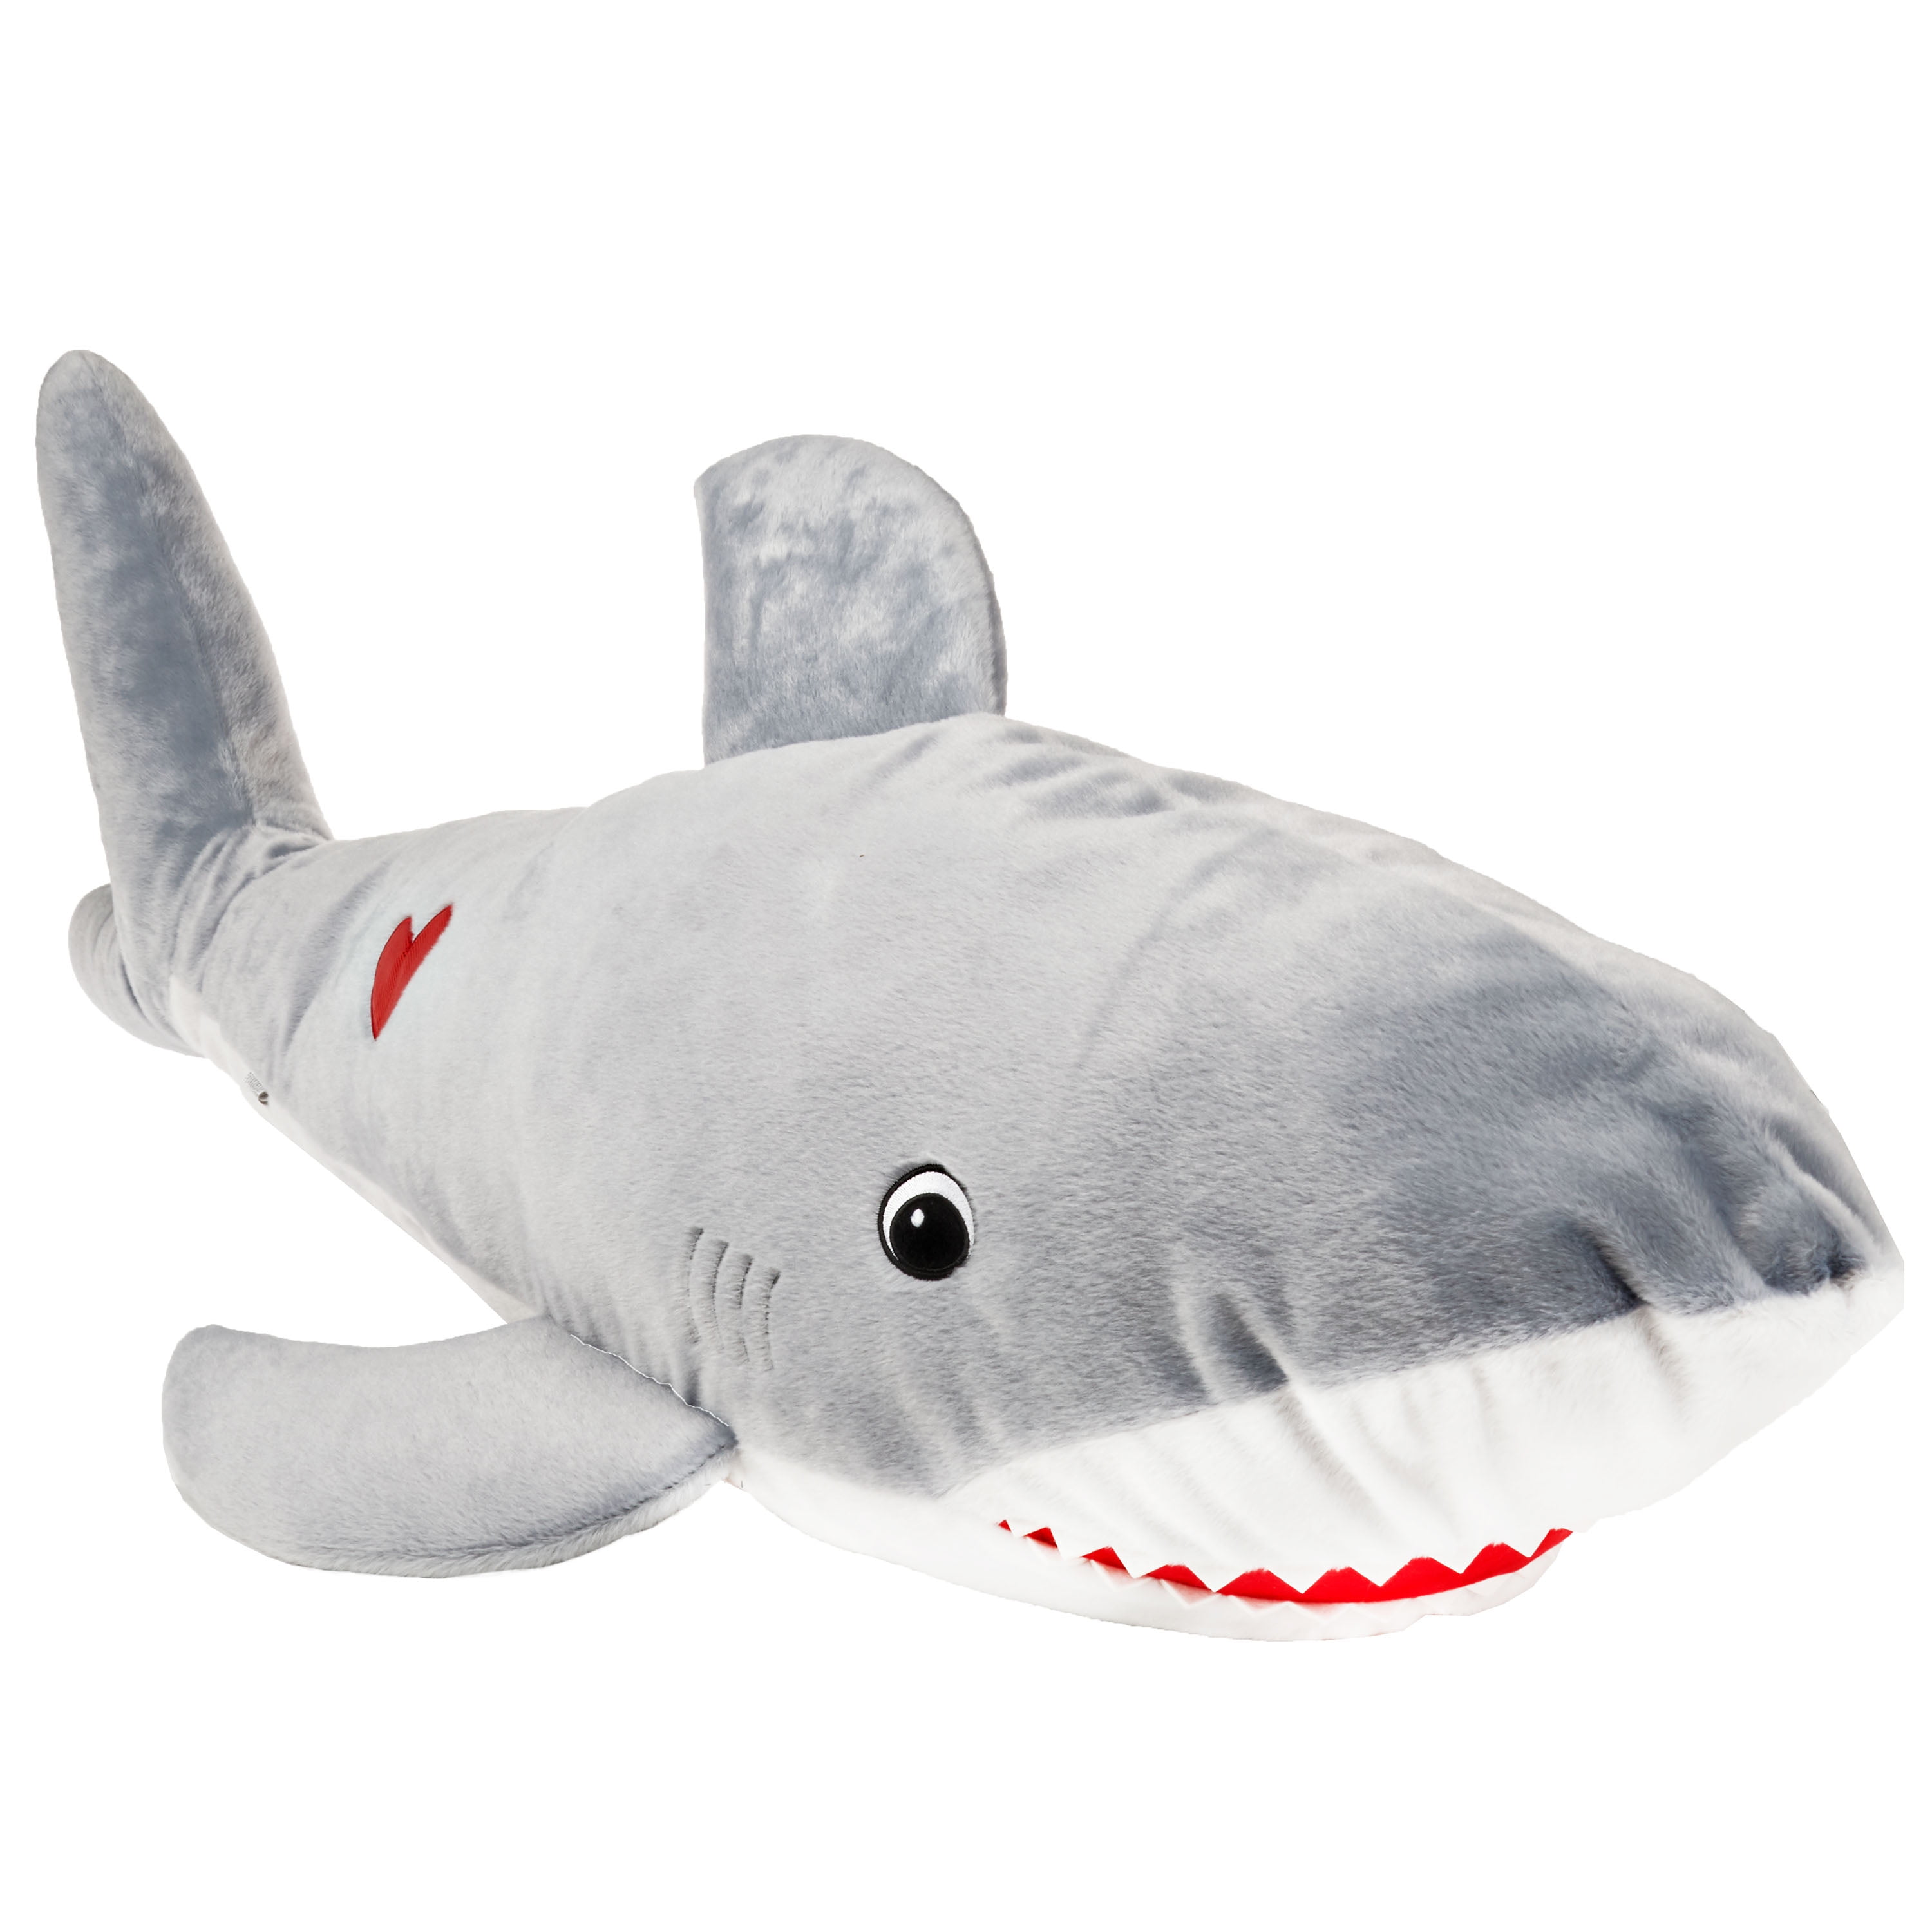 red shark plush